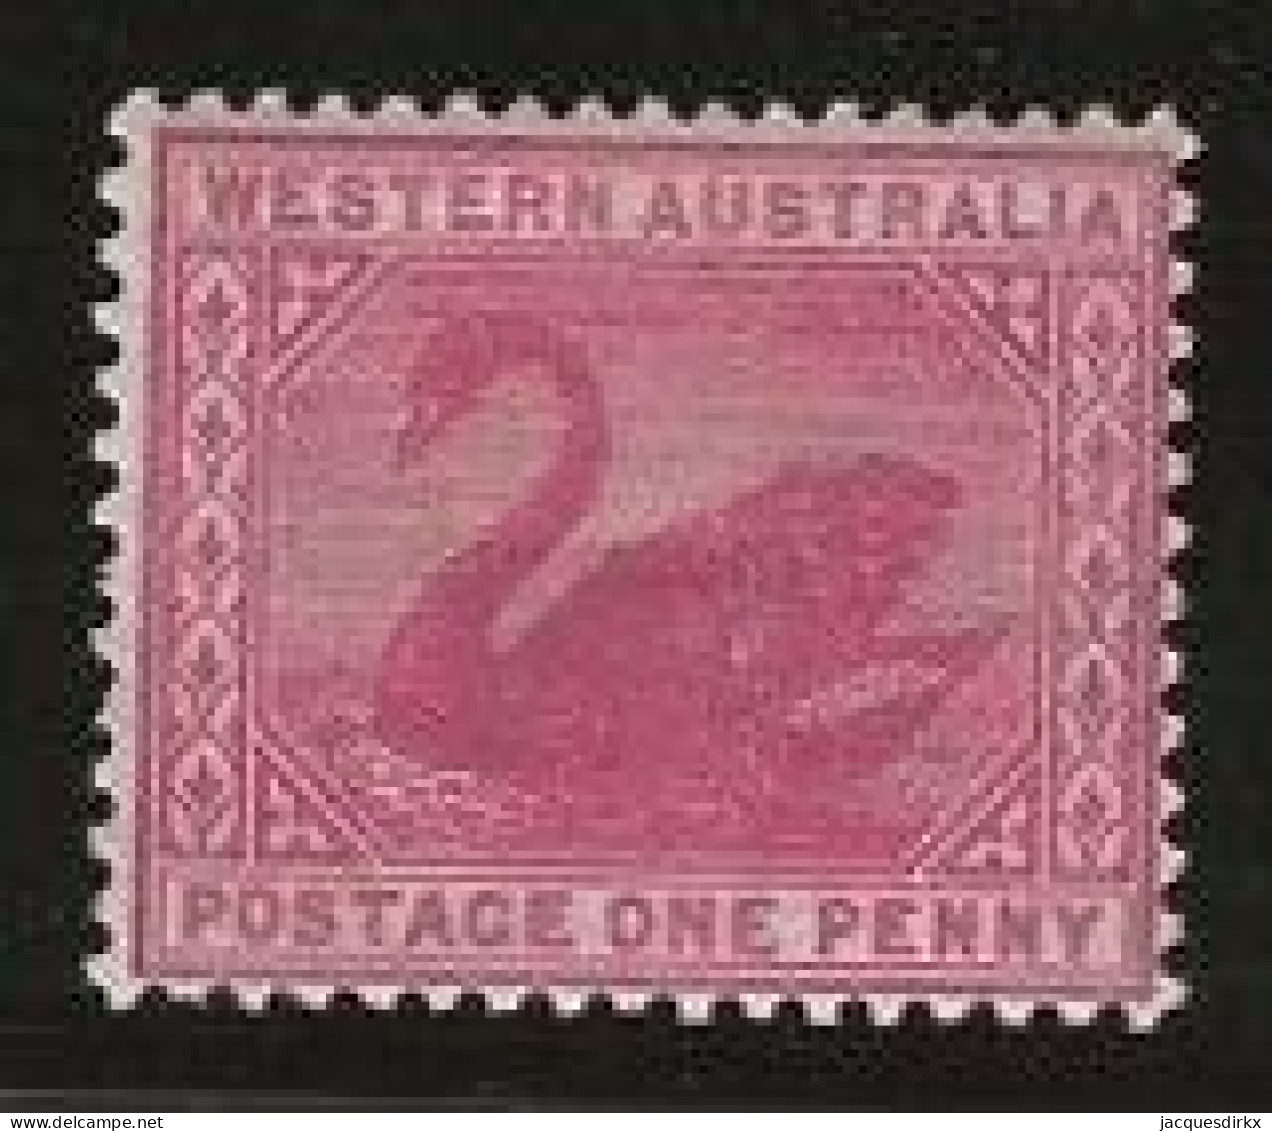 Western Australia     .   SG    .    112        .   *       .     Mint-hinged - Neufs